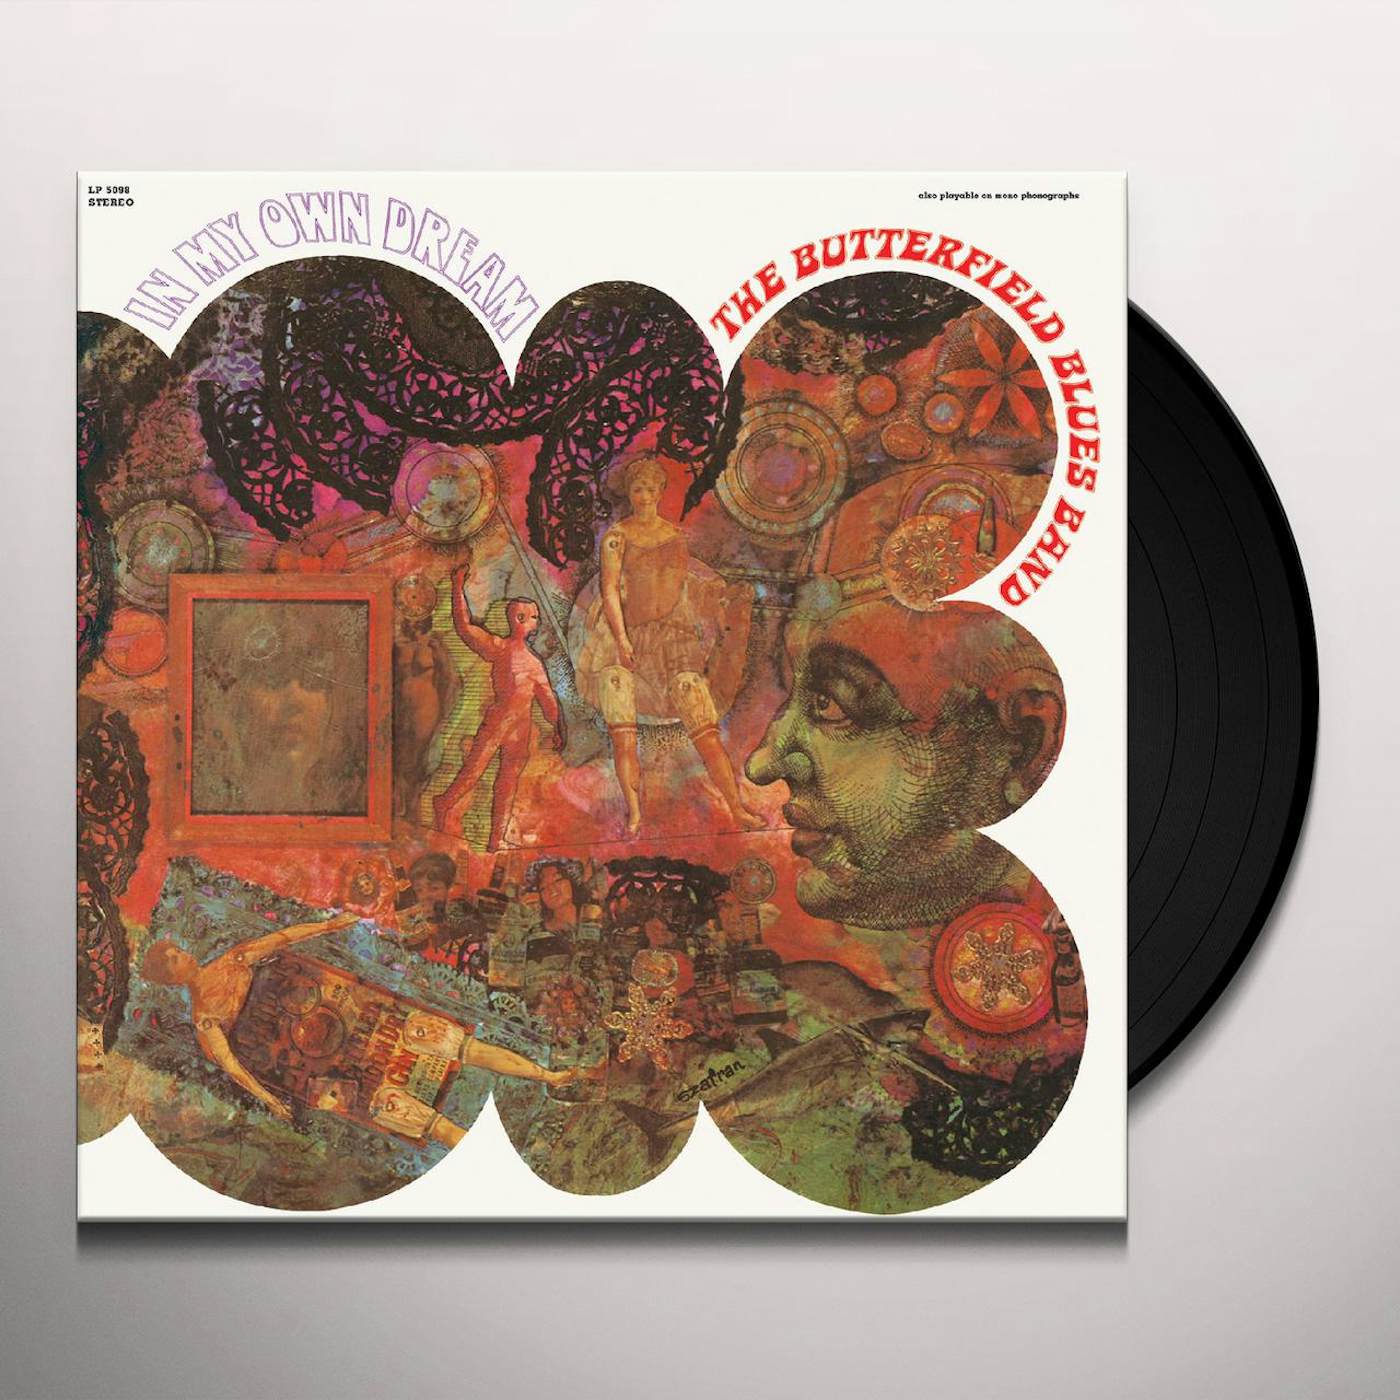 Paul Butterfield In My Own Dream Vinyl Record